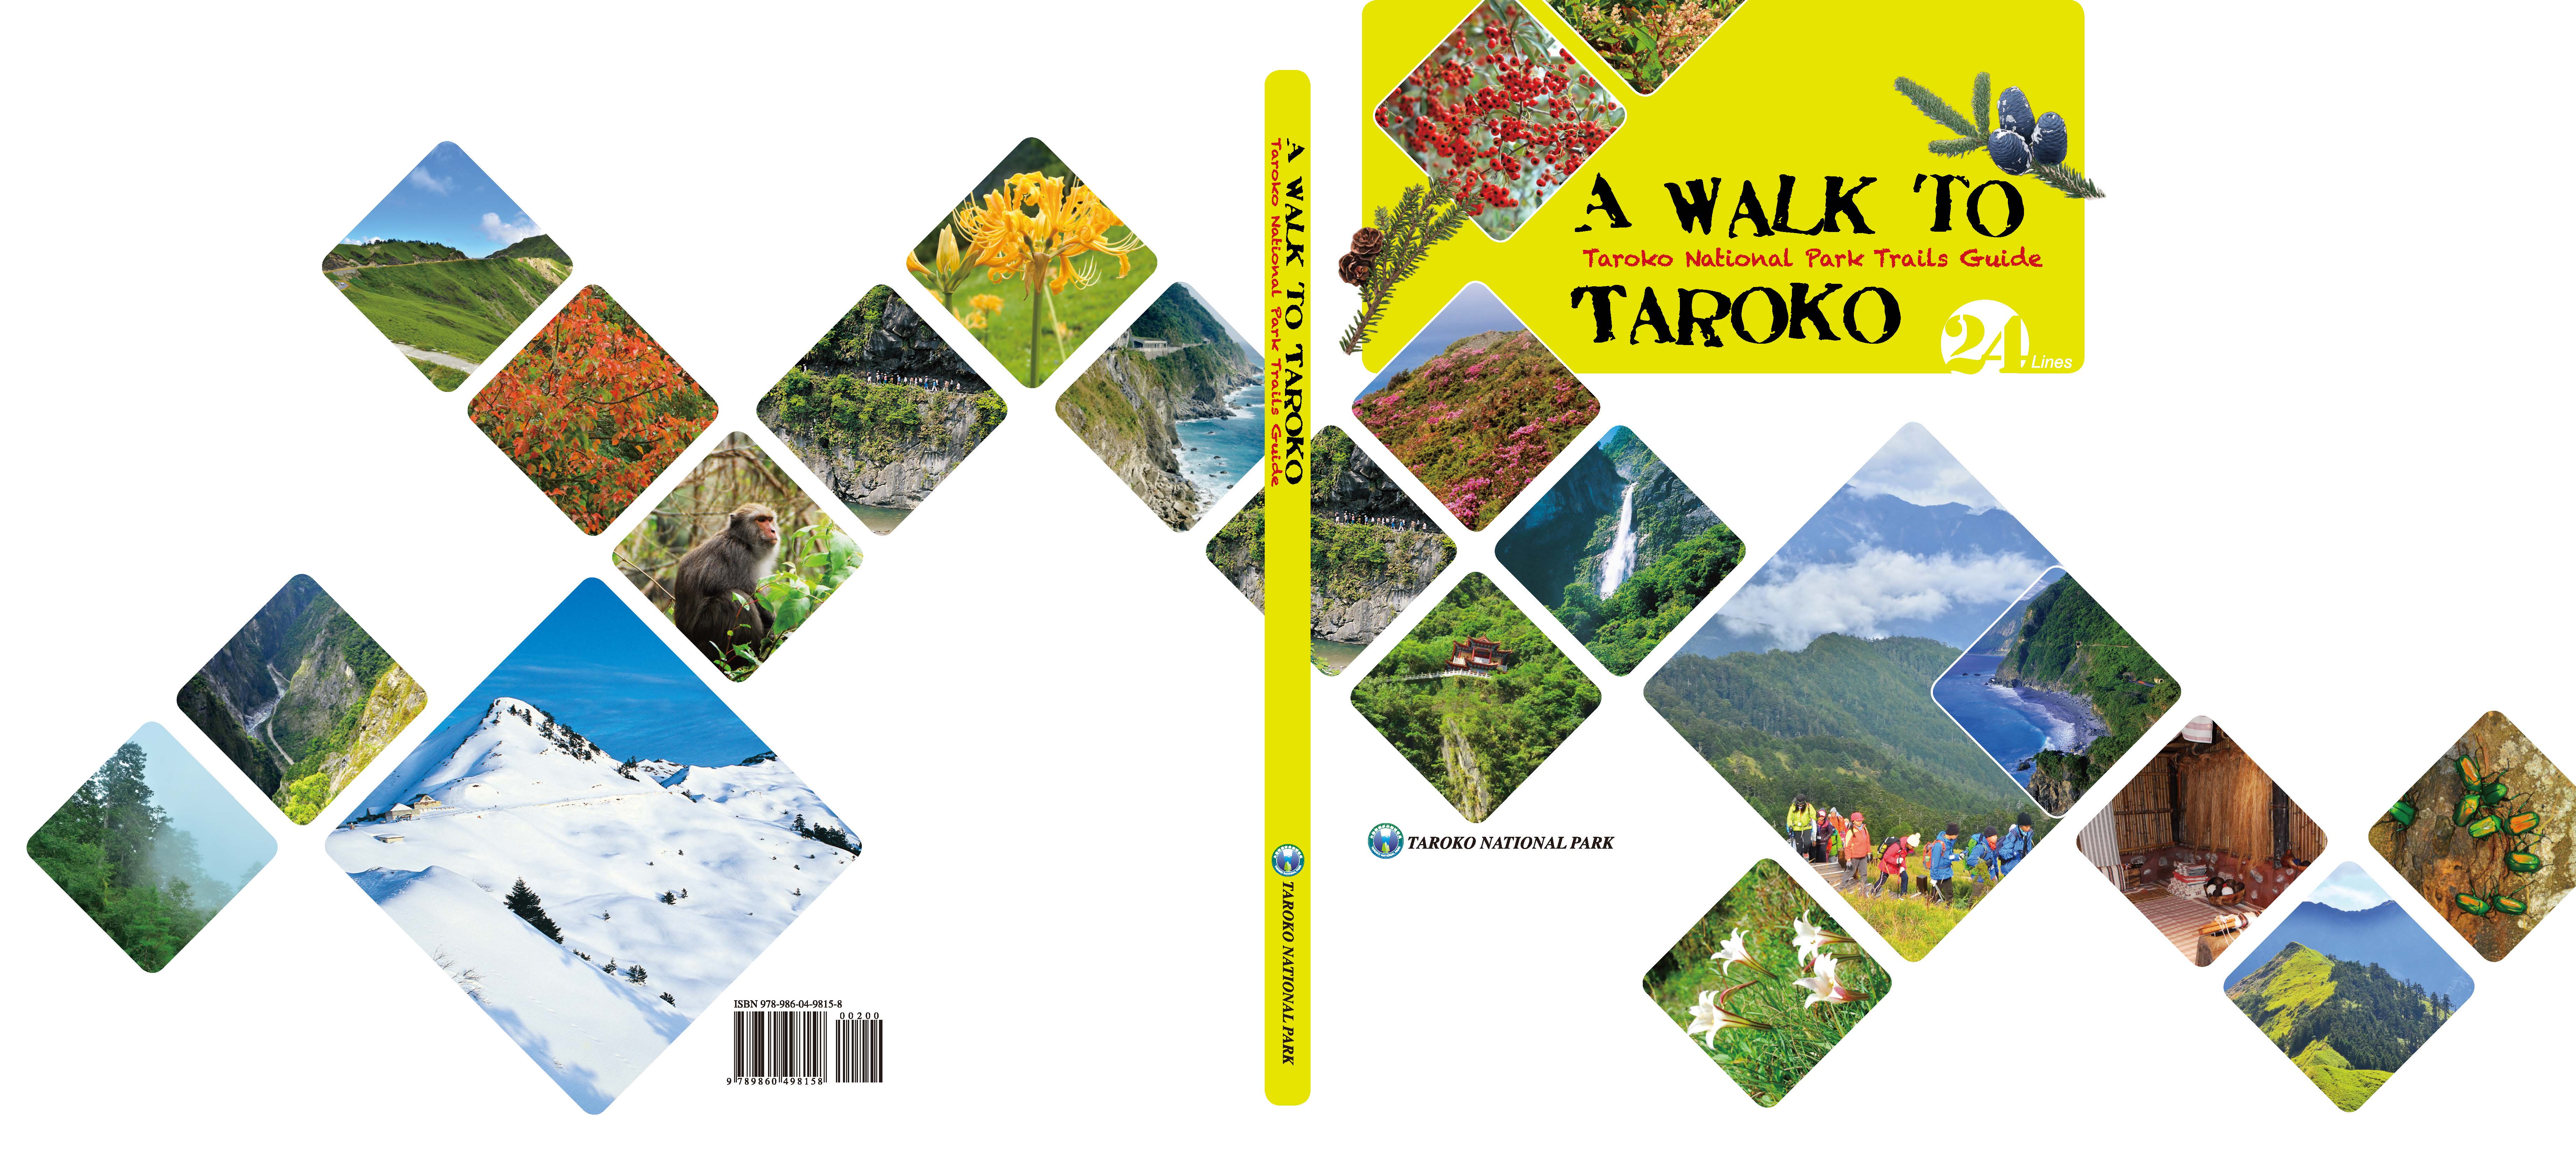  A Walk to Taroko - Taroko National Park Trails Guide